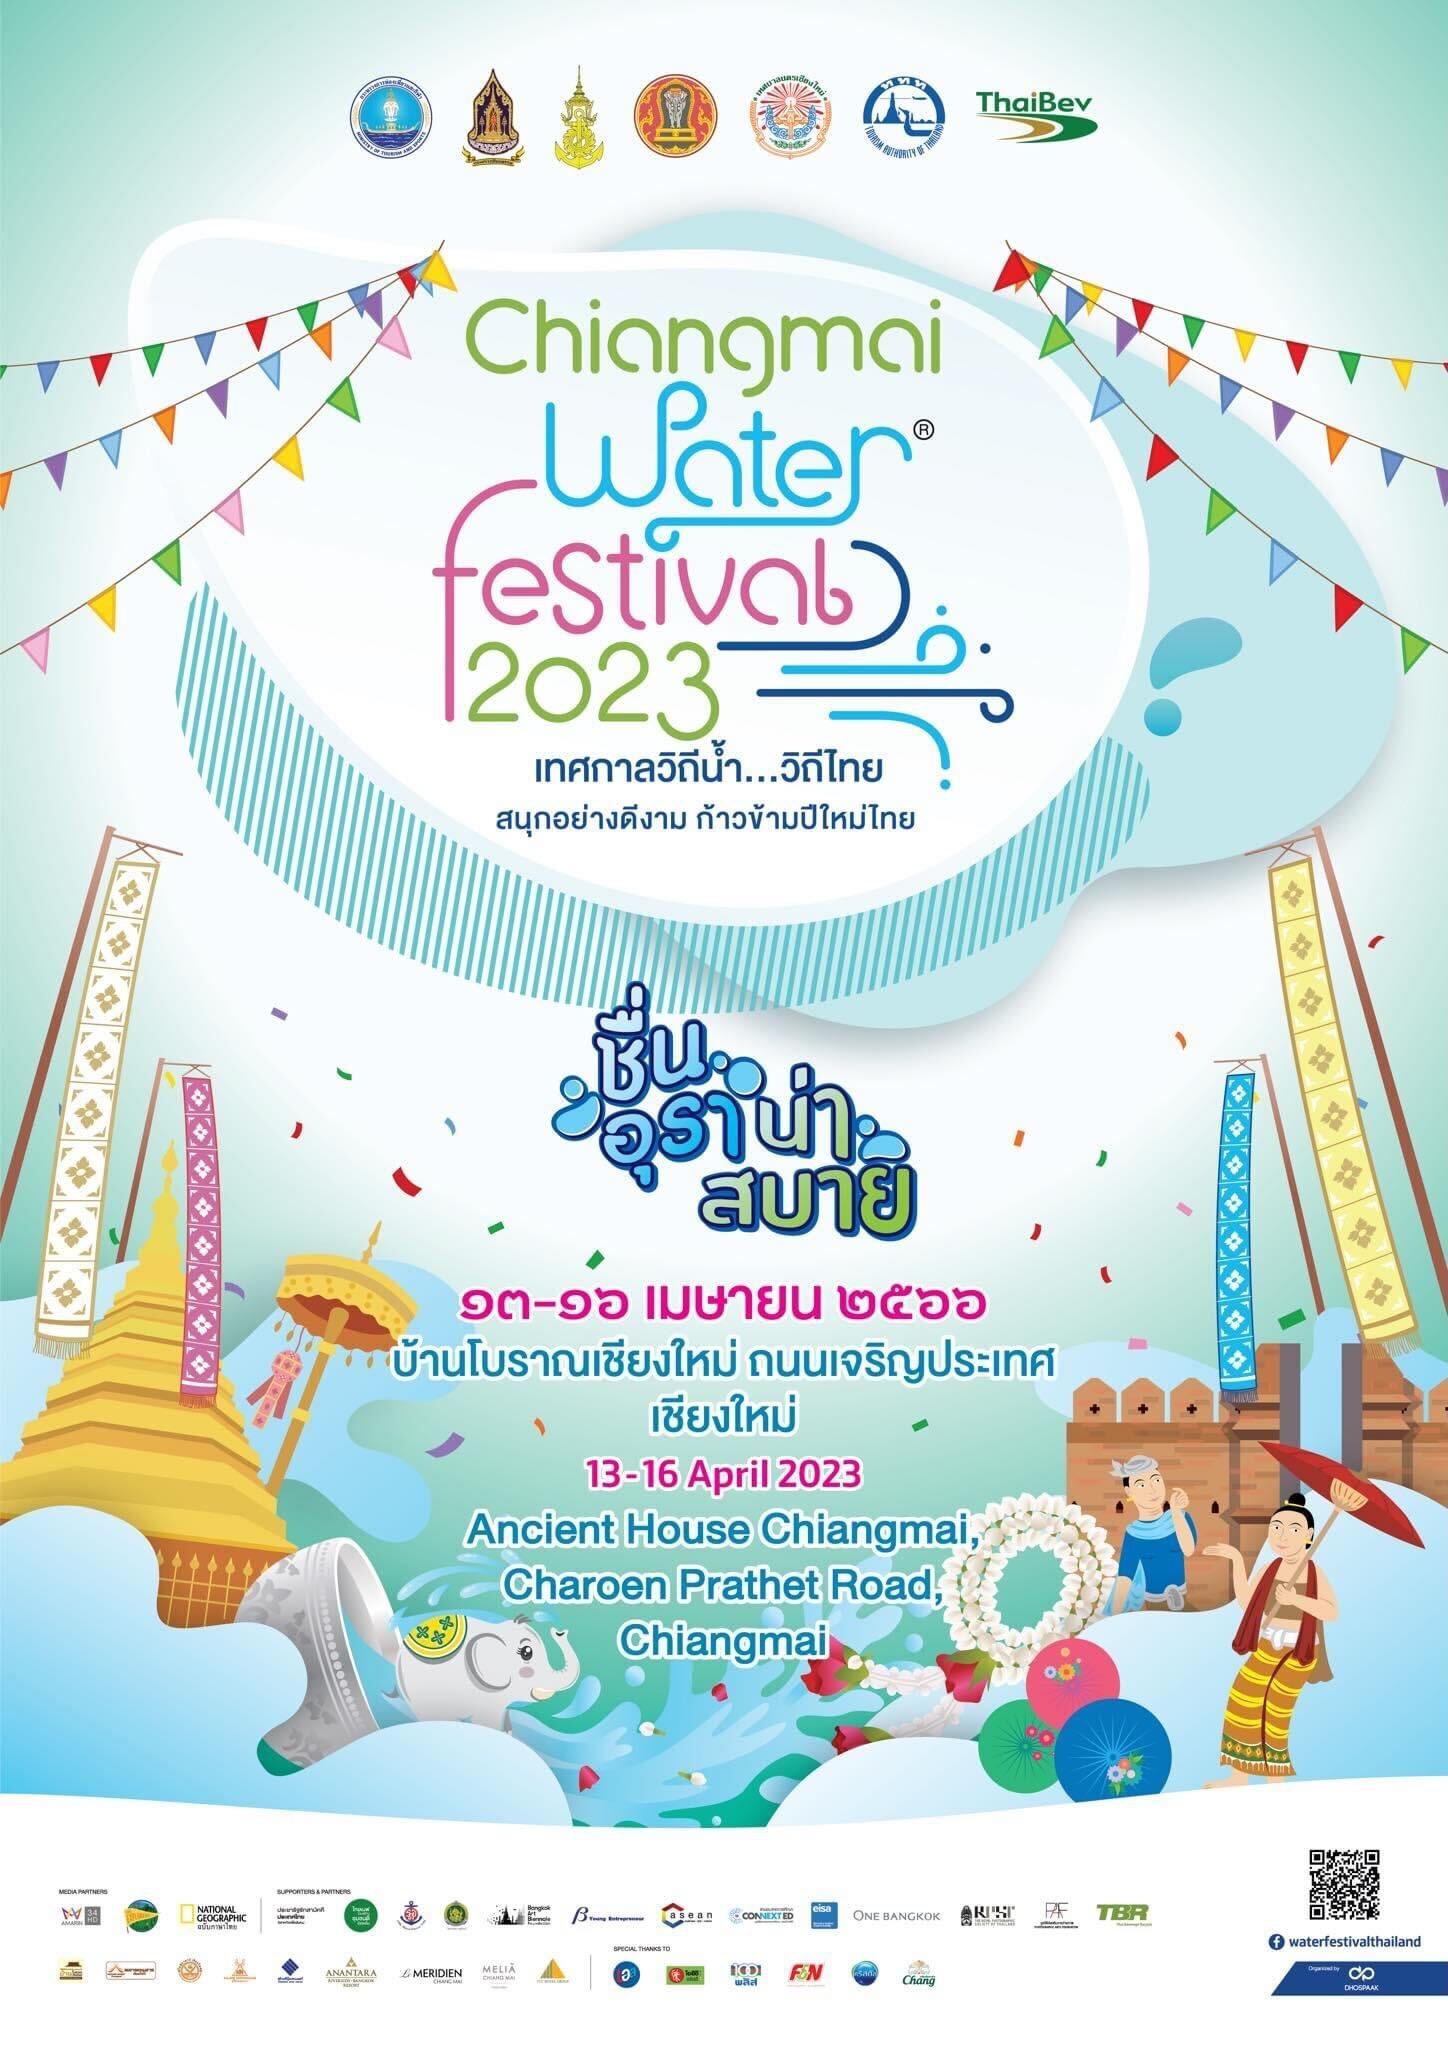 Water Festival Thailand - Chiangmai Water Festival 2023